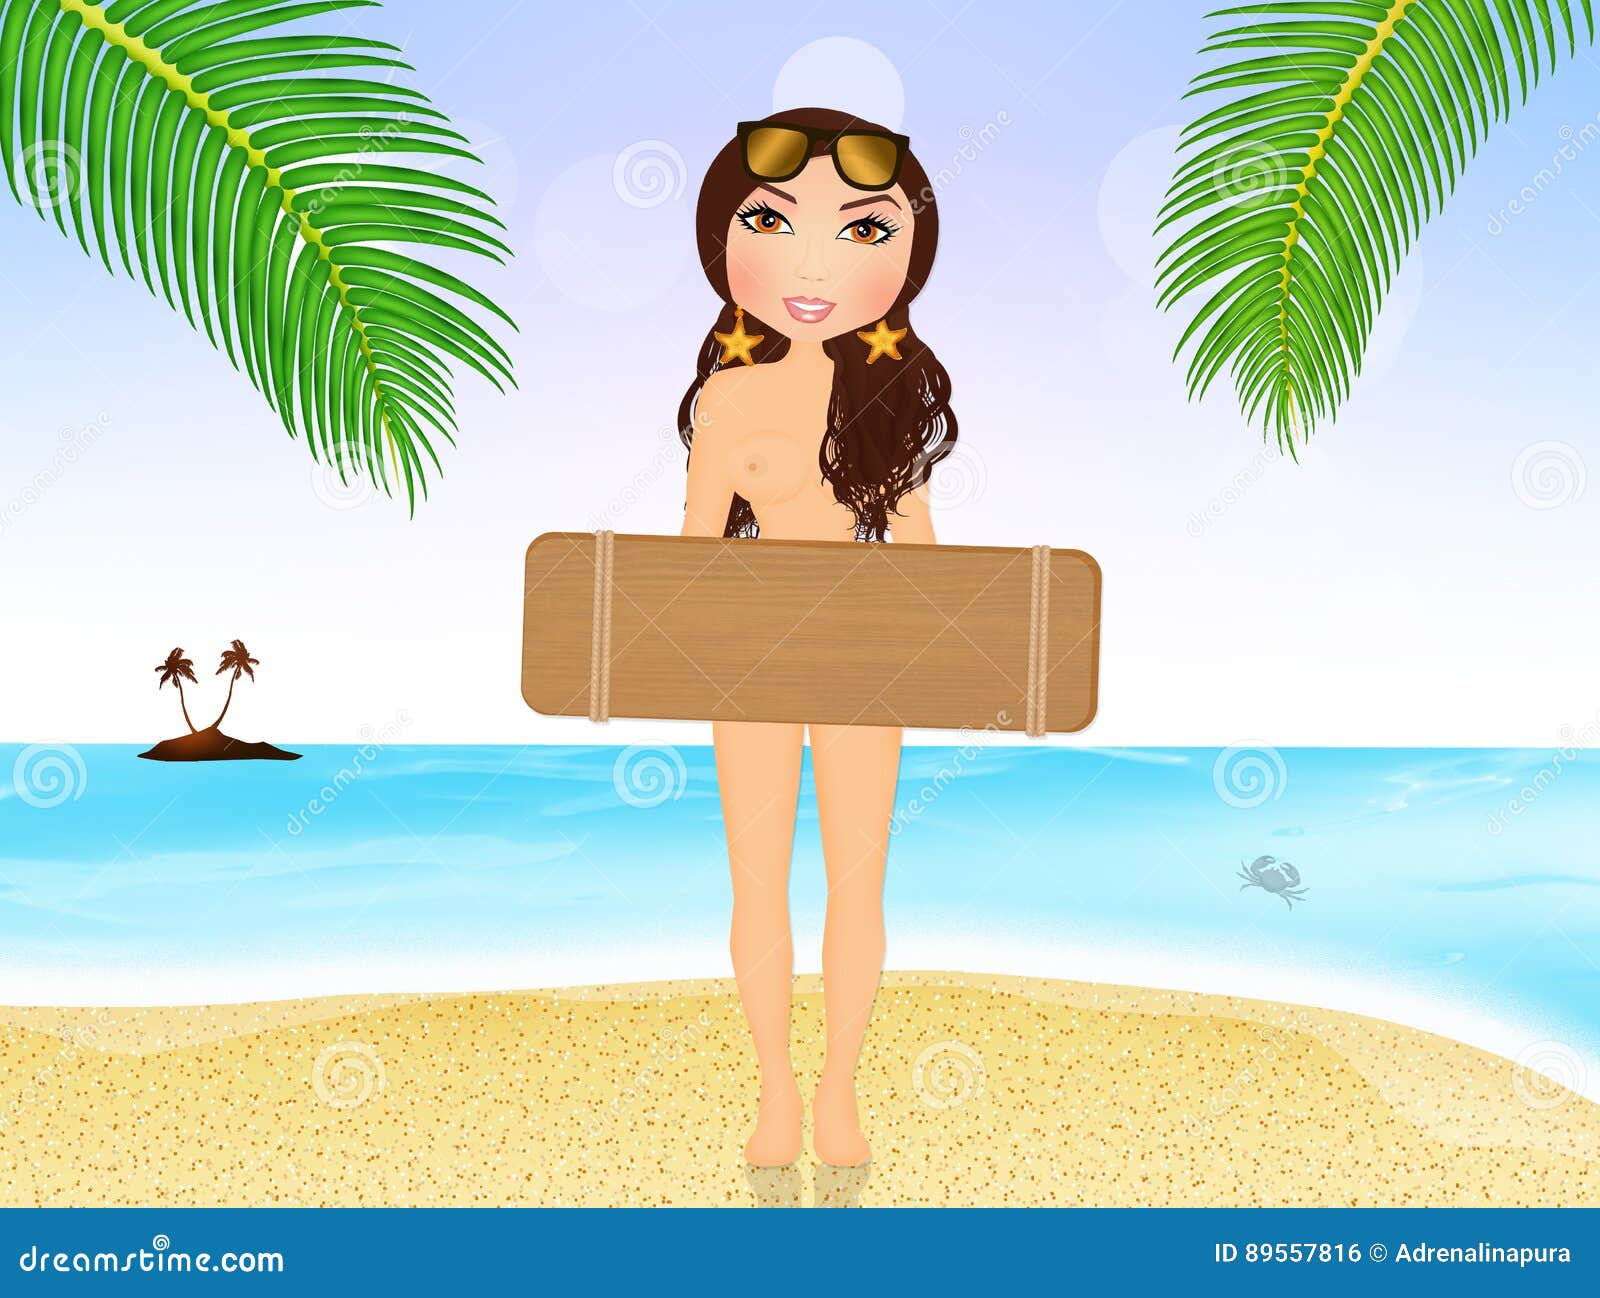 aden baruah add nude beach babes videos photo